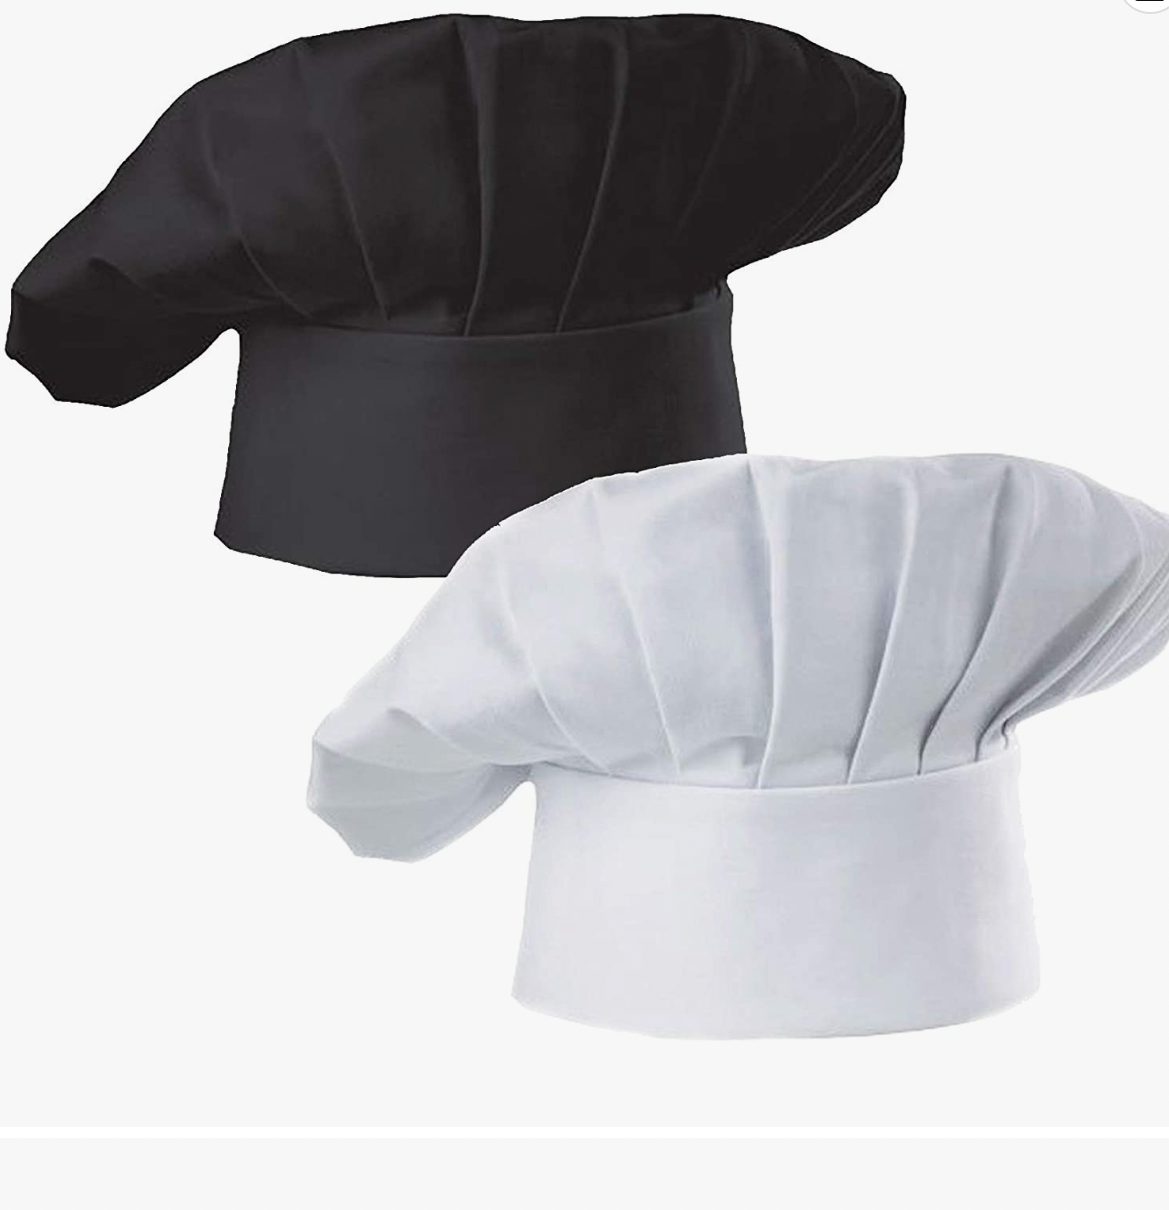 Baker cooking hats